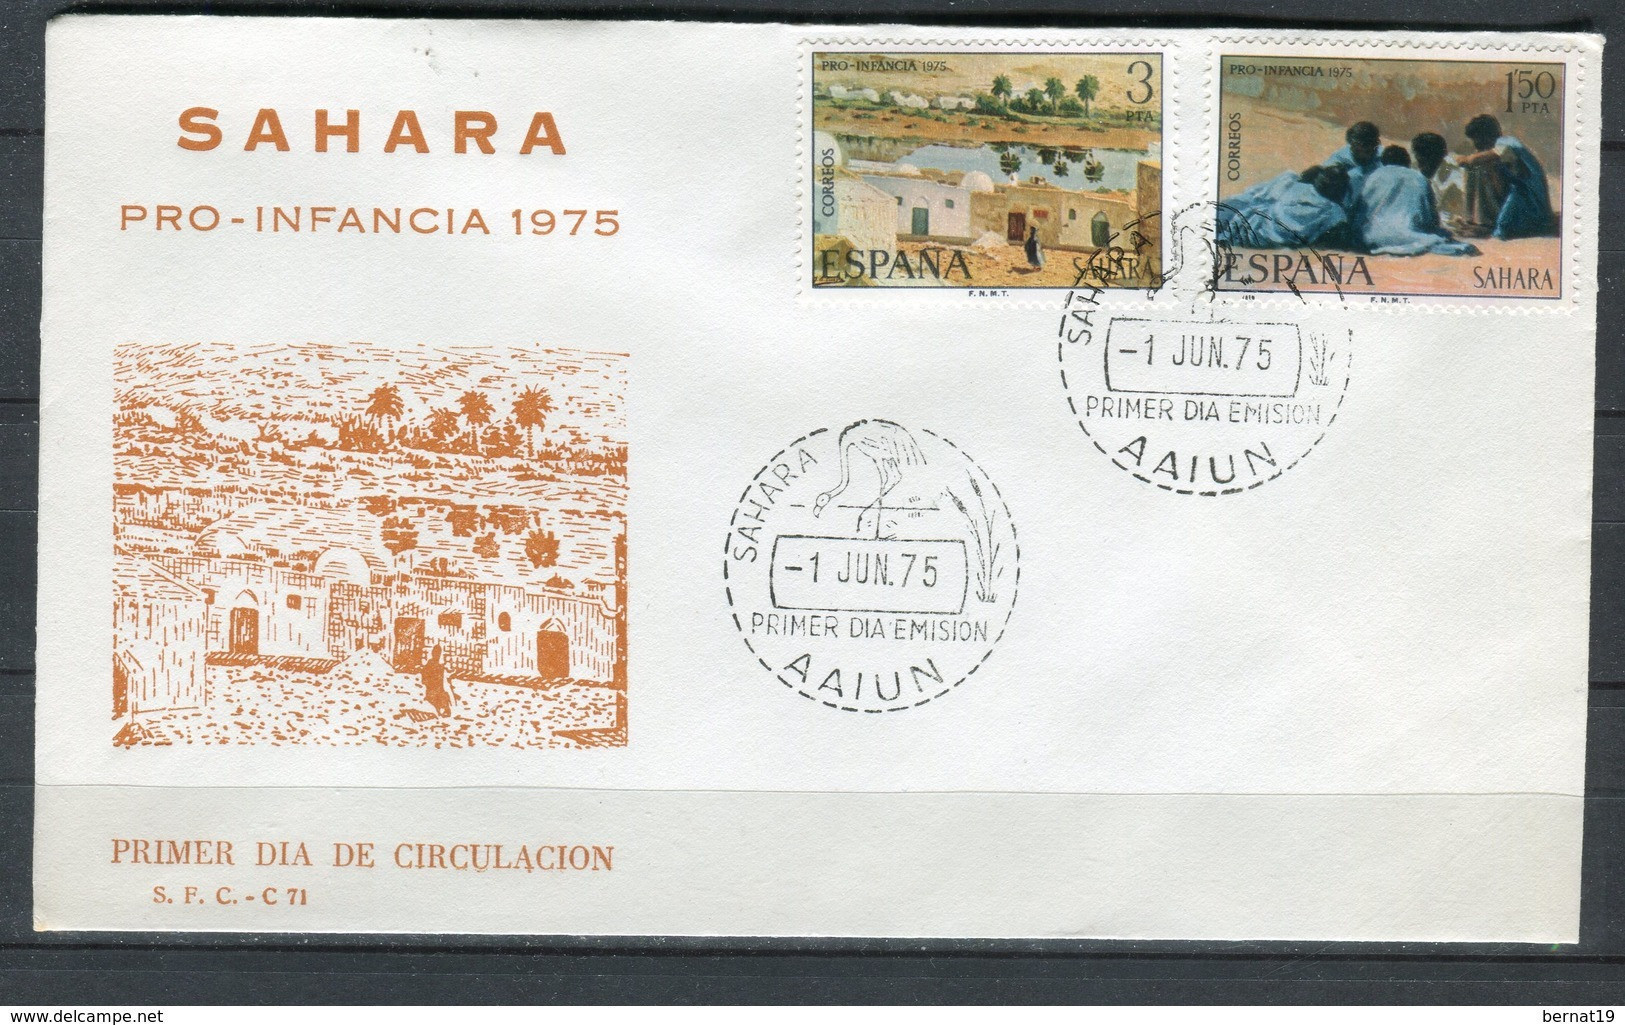 Sahara 1975. Edifil 320-21 FDC. - Spanische Sahara